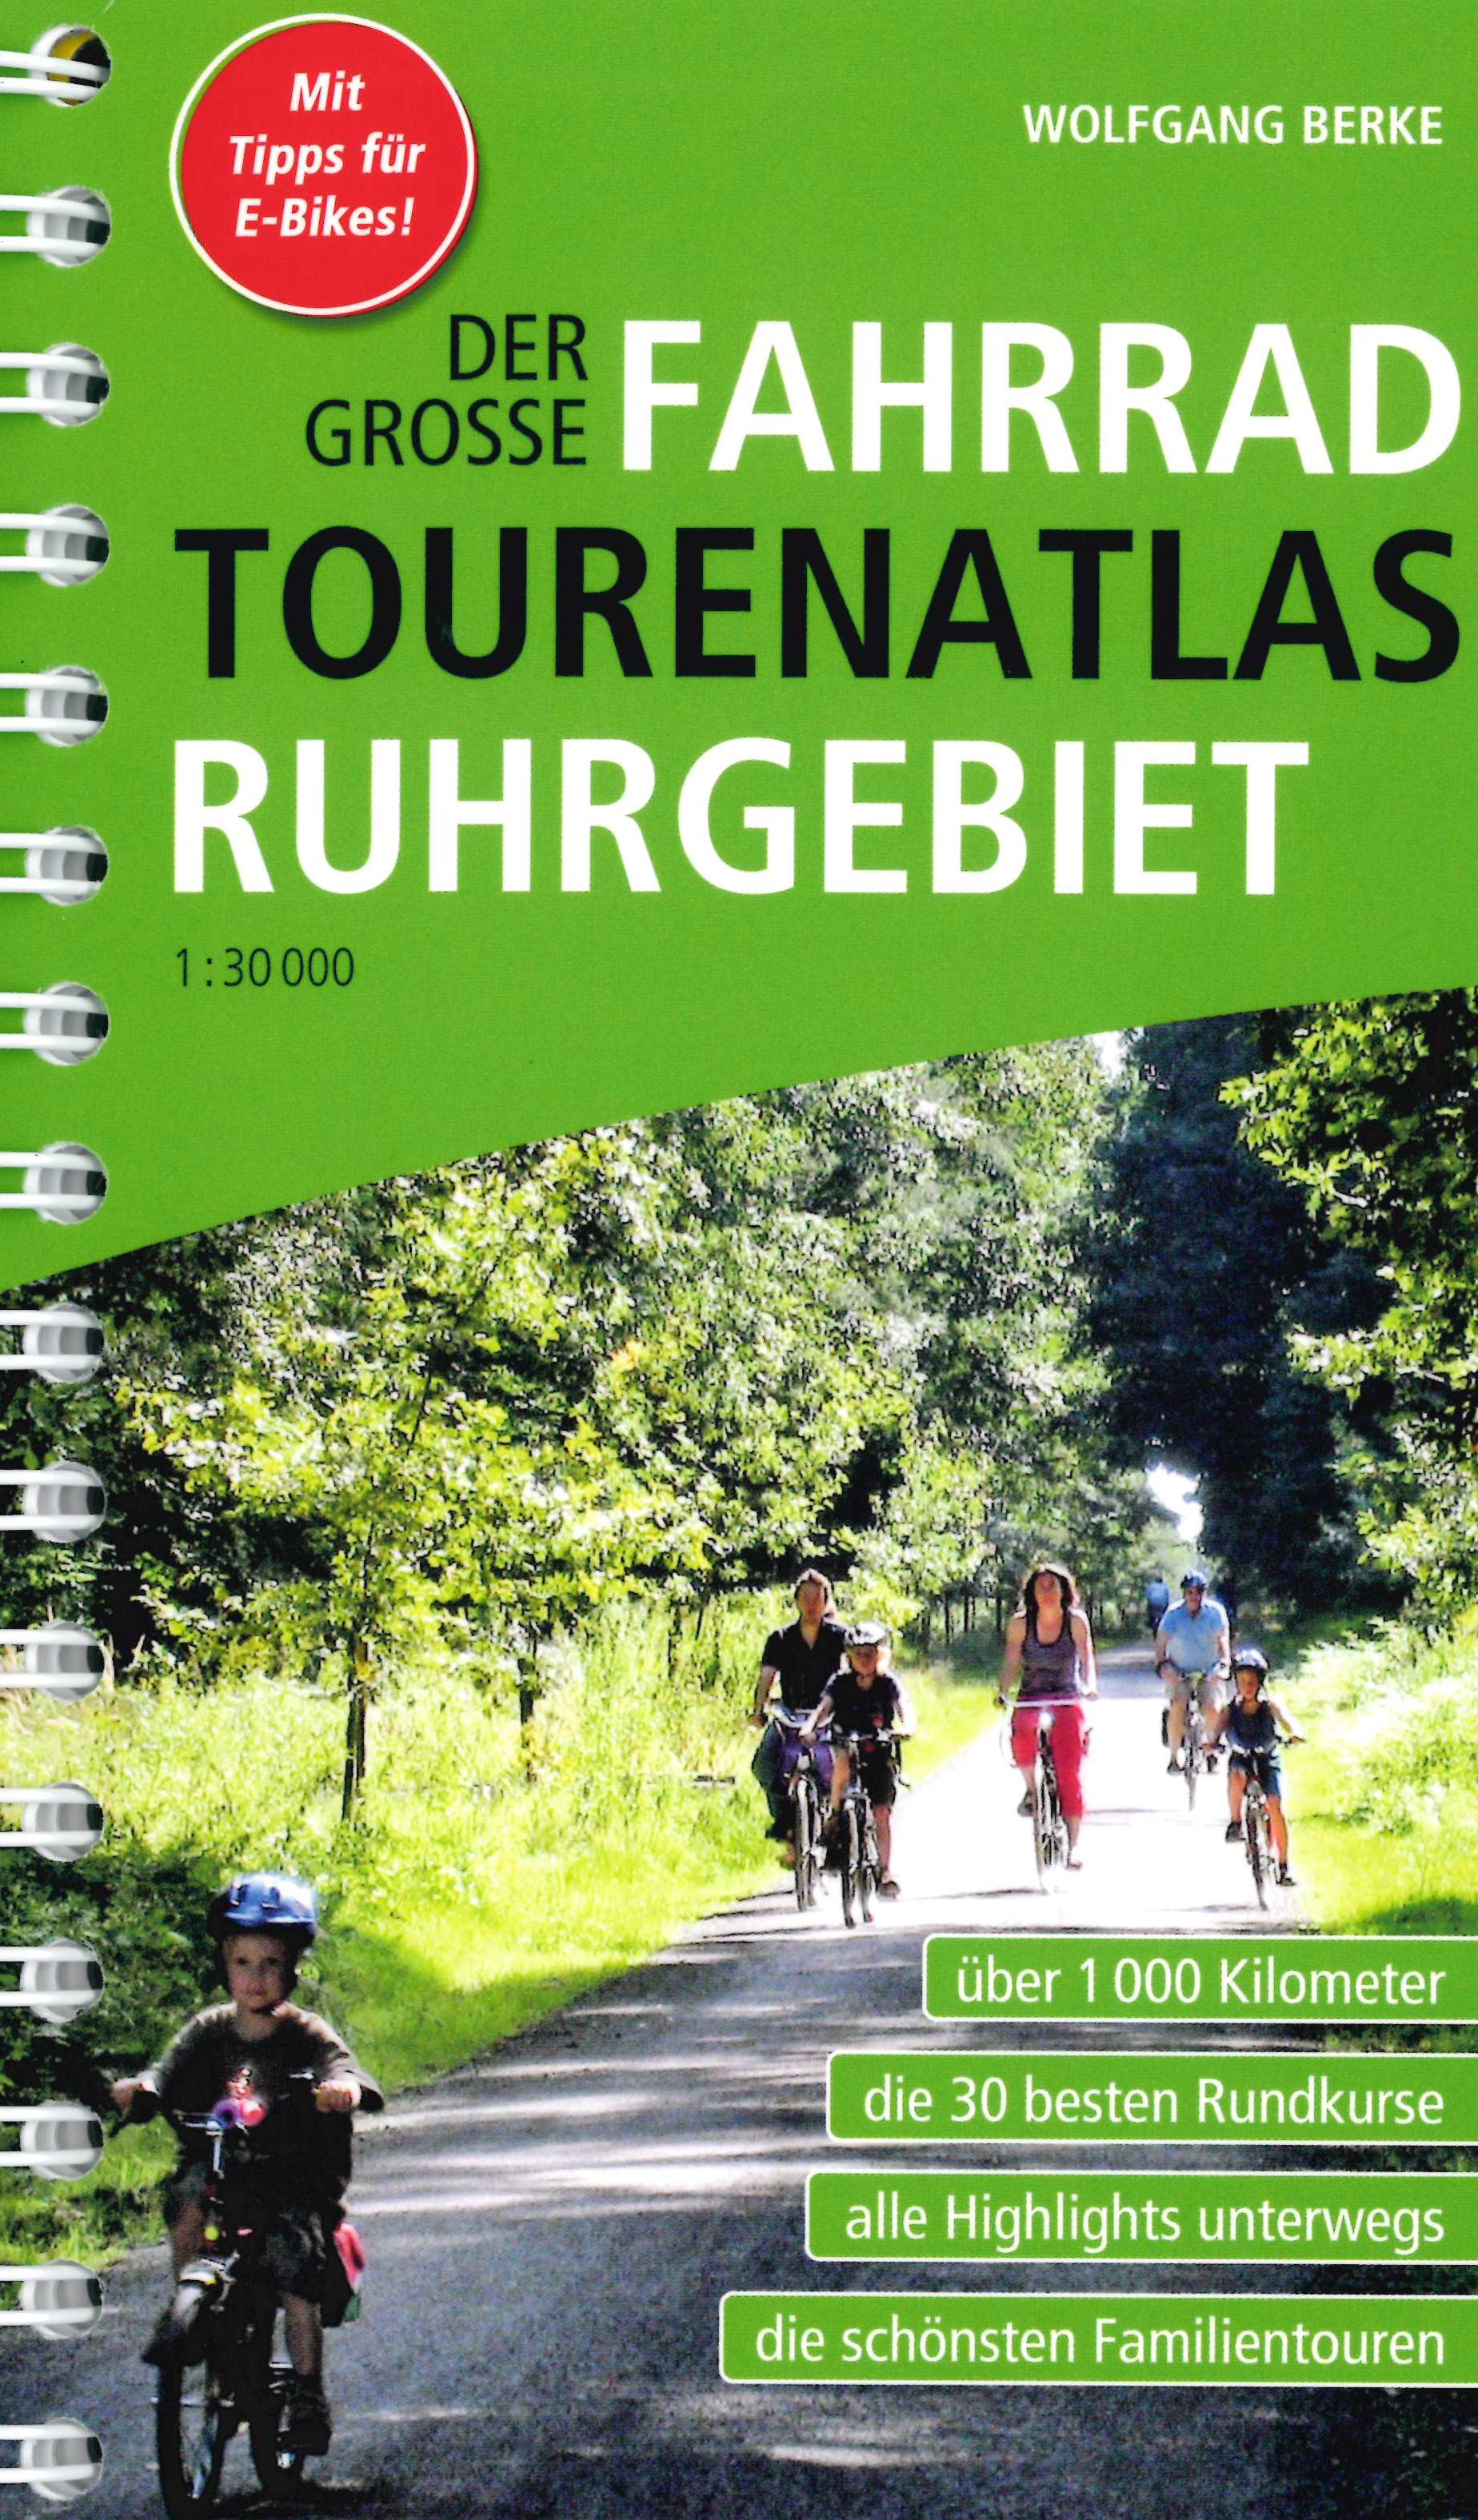 Fahrrad-Tourenatlas als Ringbuch